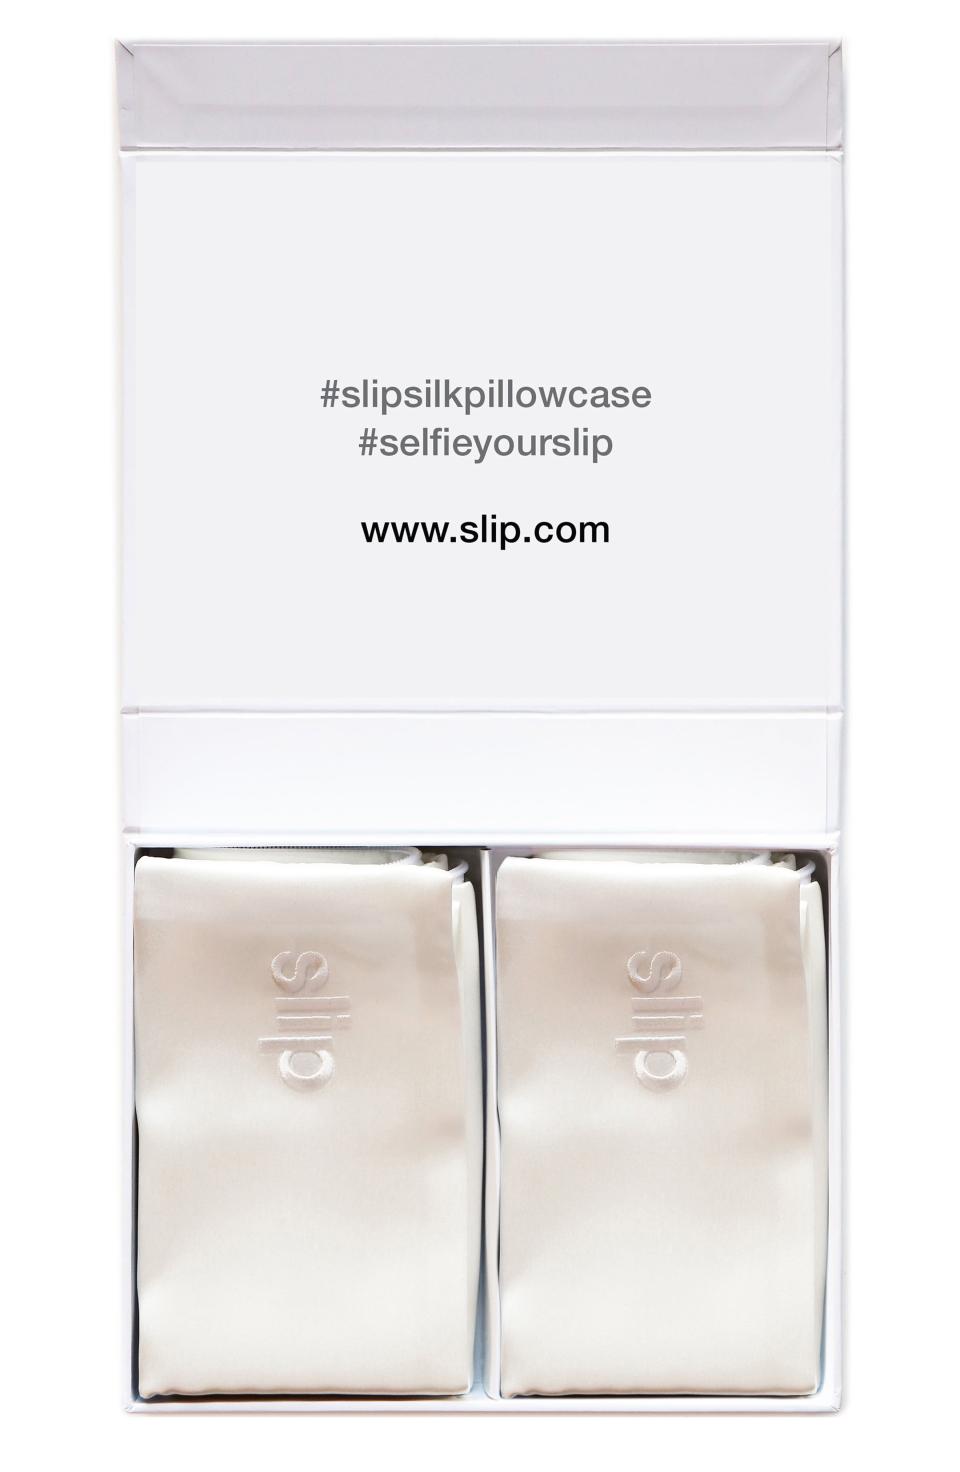 16) Slip Pure Silk Pillowcases